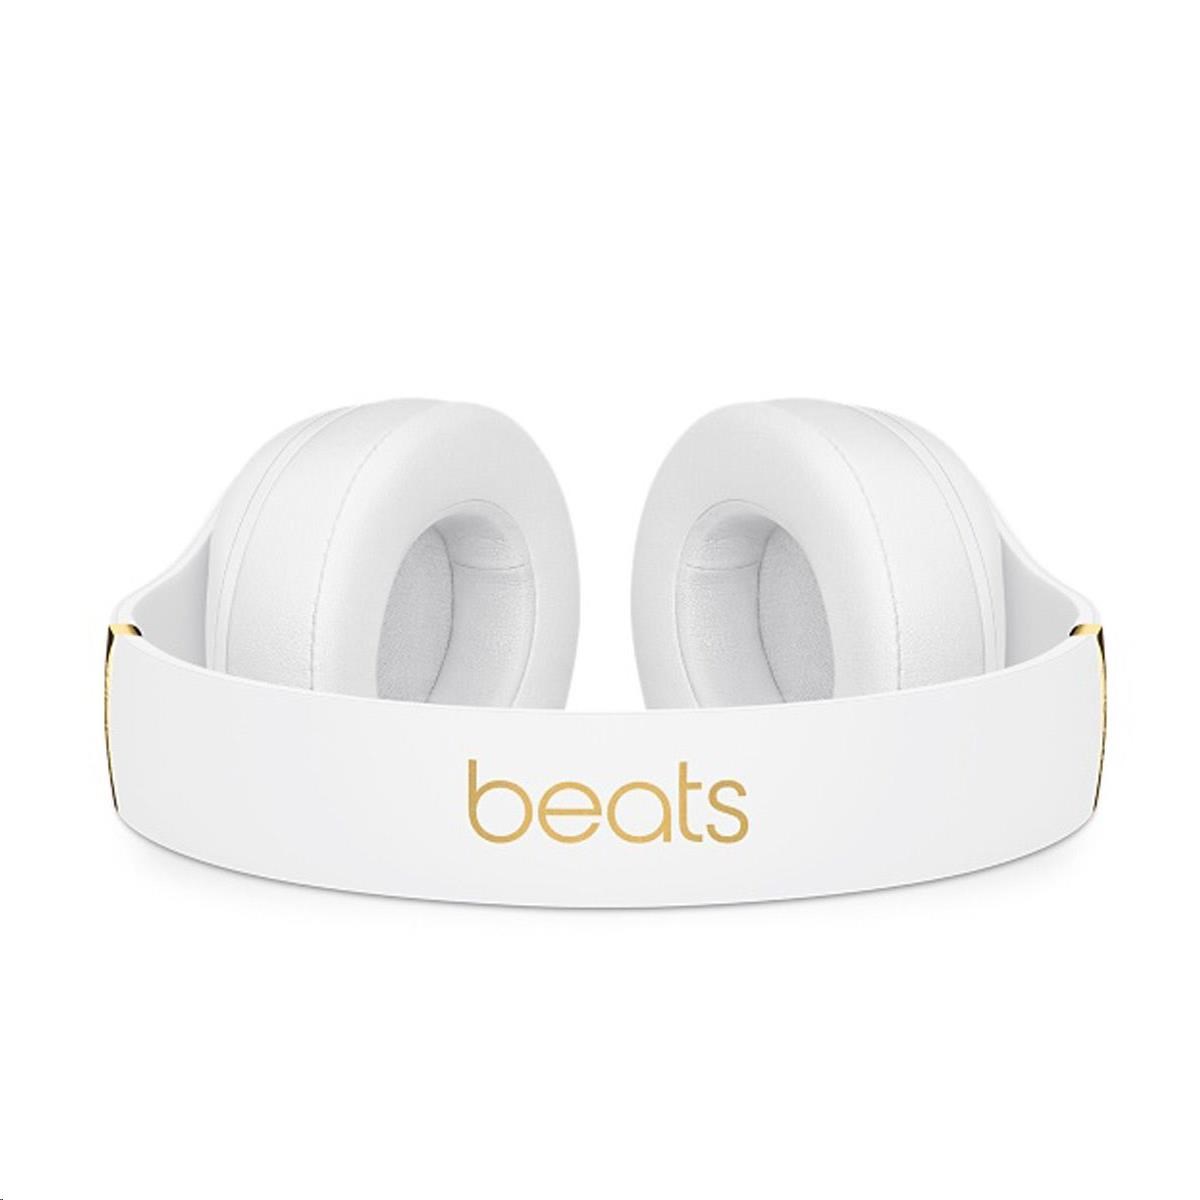 Beats Studio3 Wireless Over-Ear Headphones - White4 